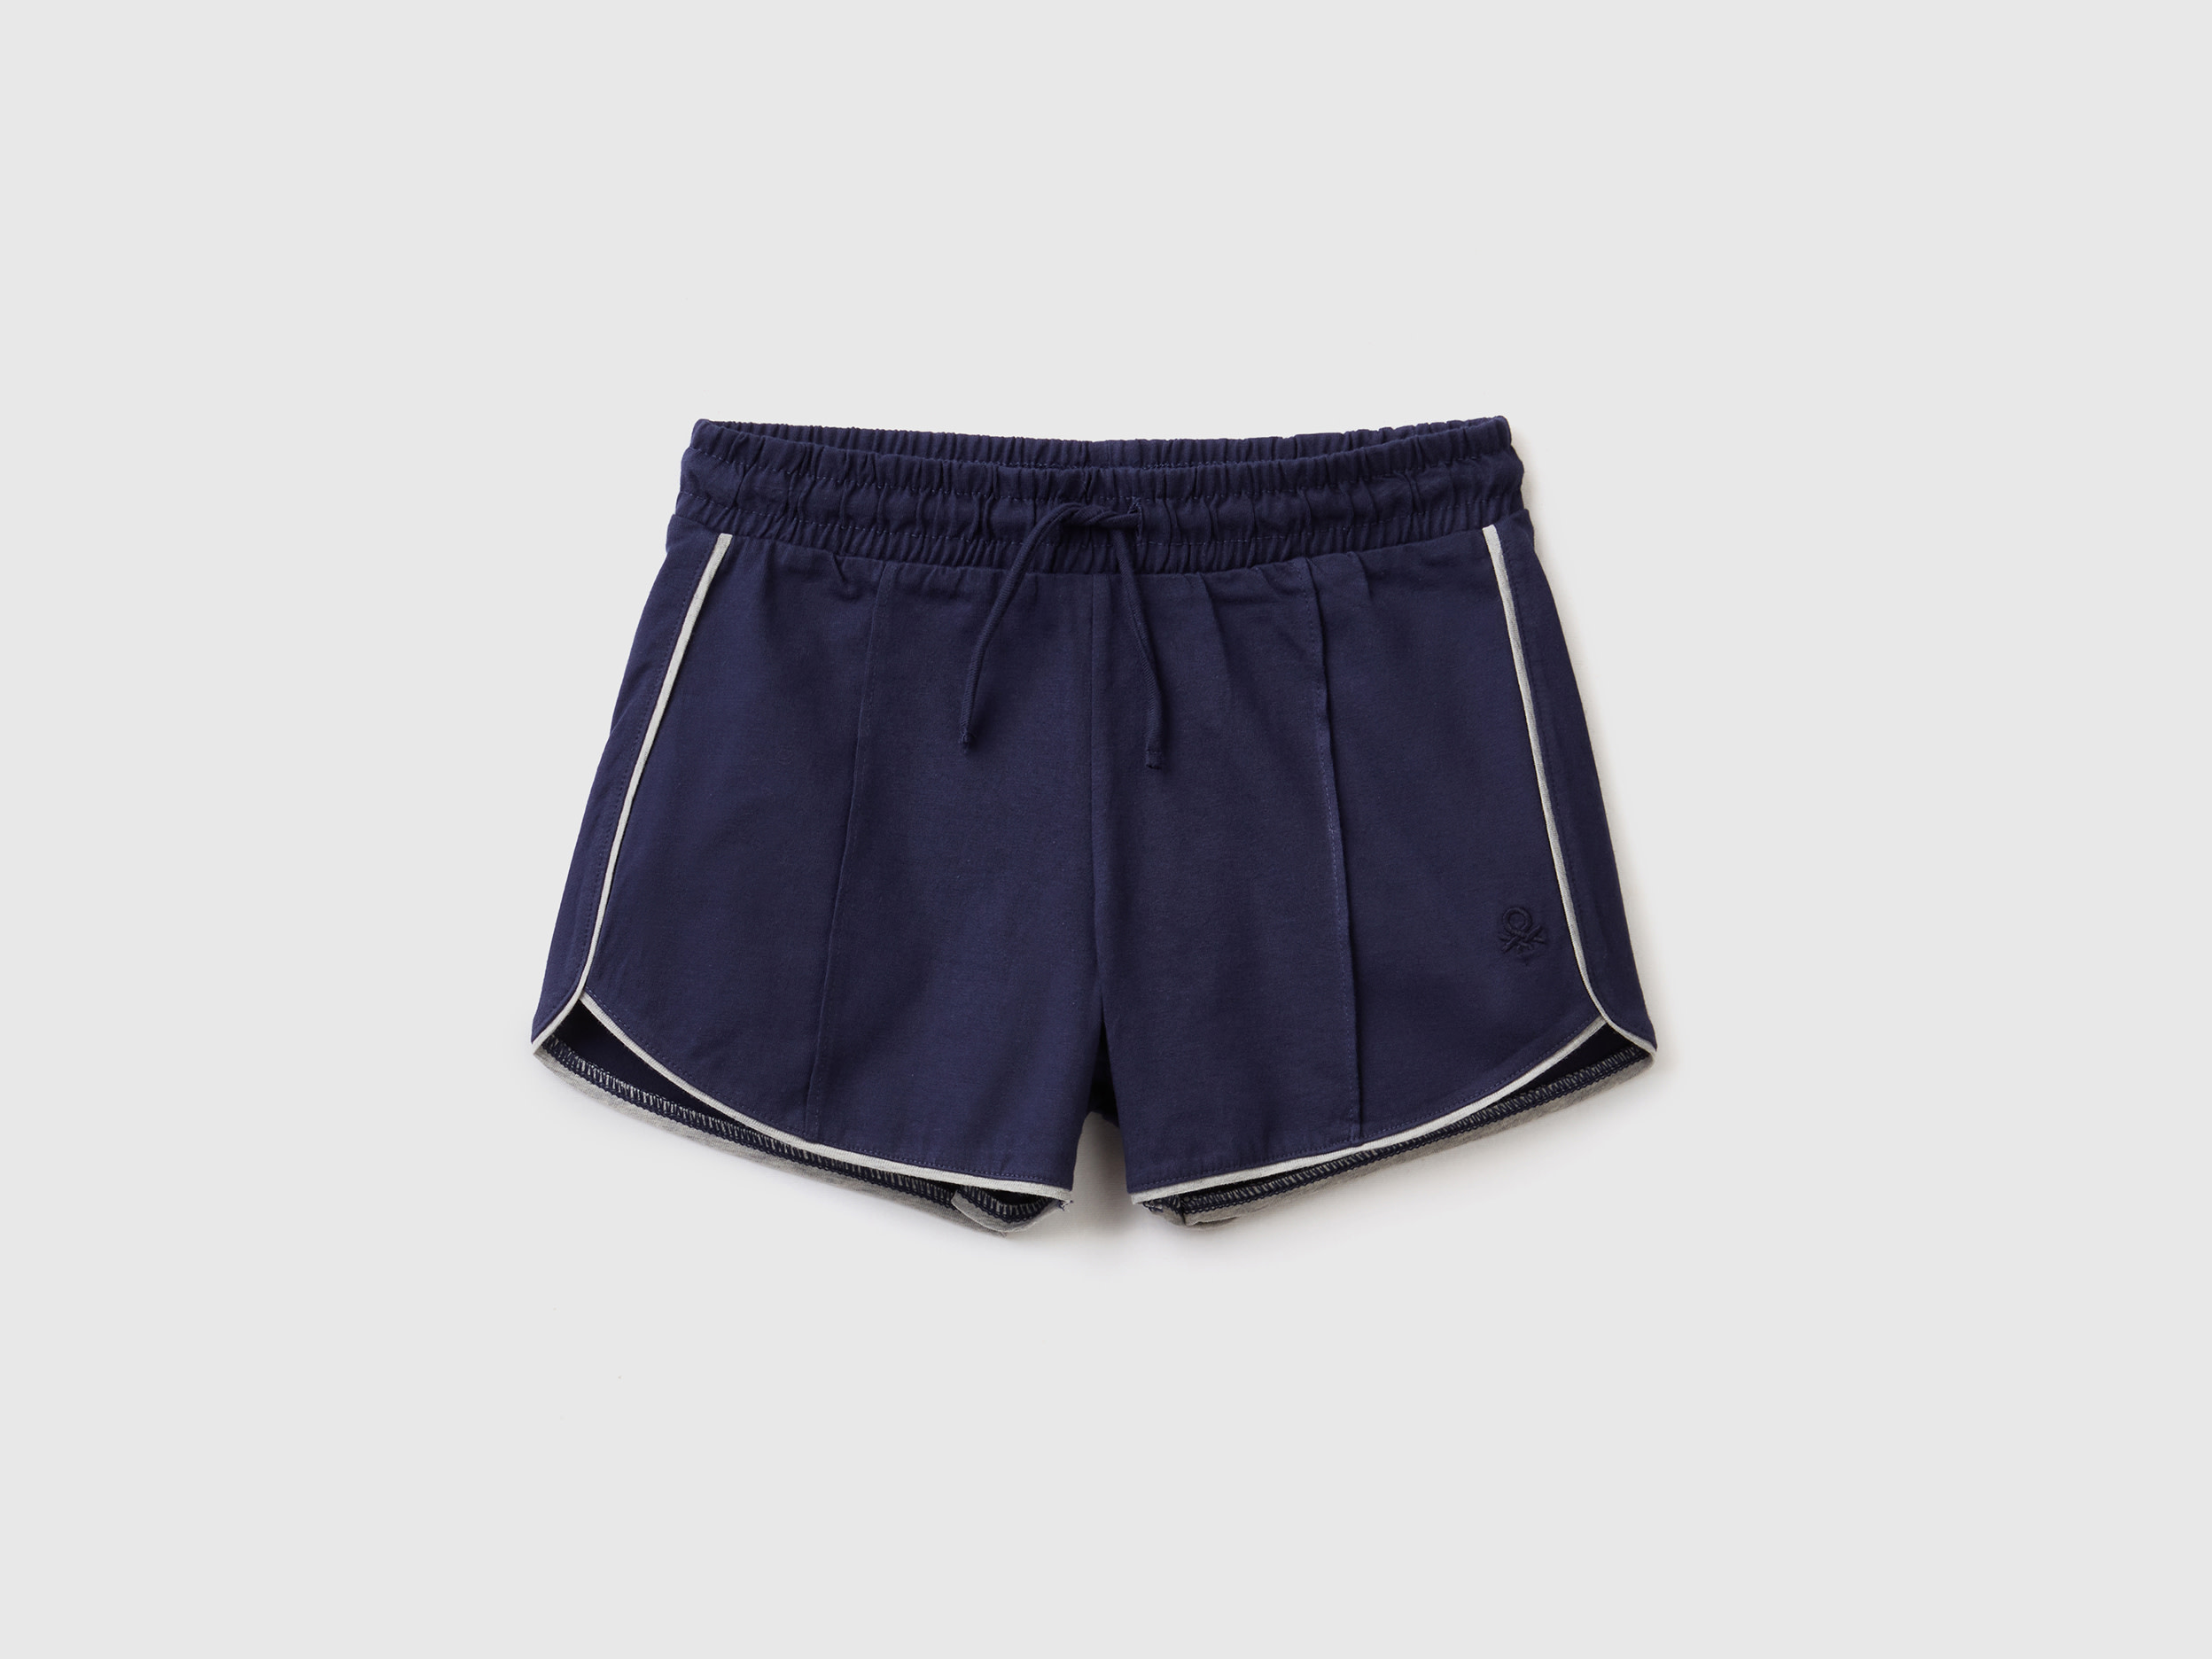 Benetton, 100% Cotton Shorts With Drawstring, size 3XL, Dark Blue, Kids